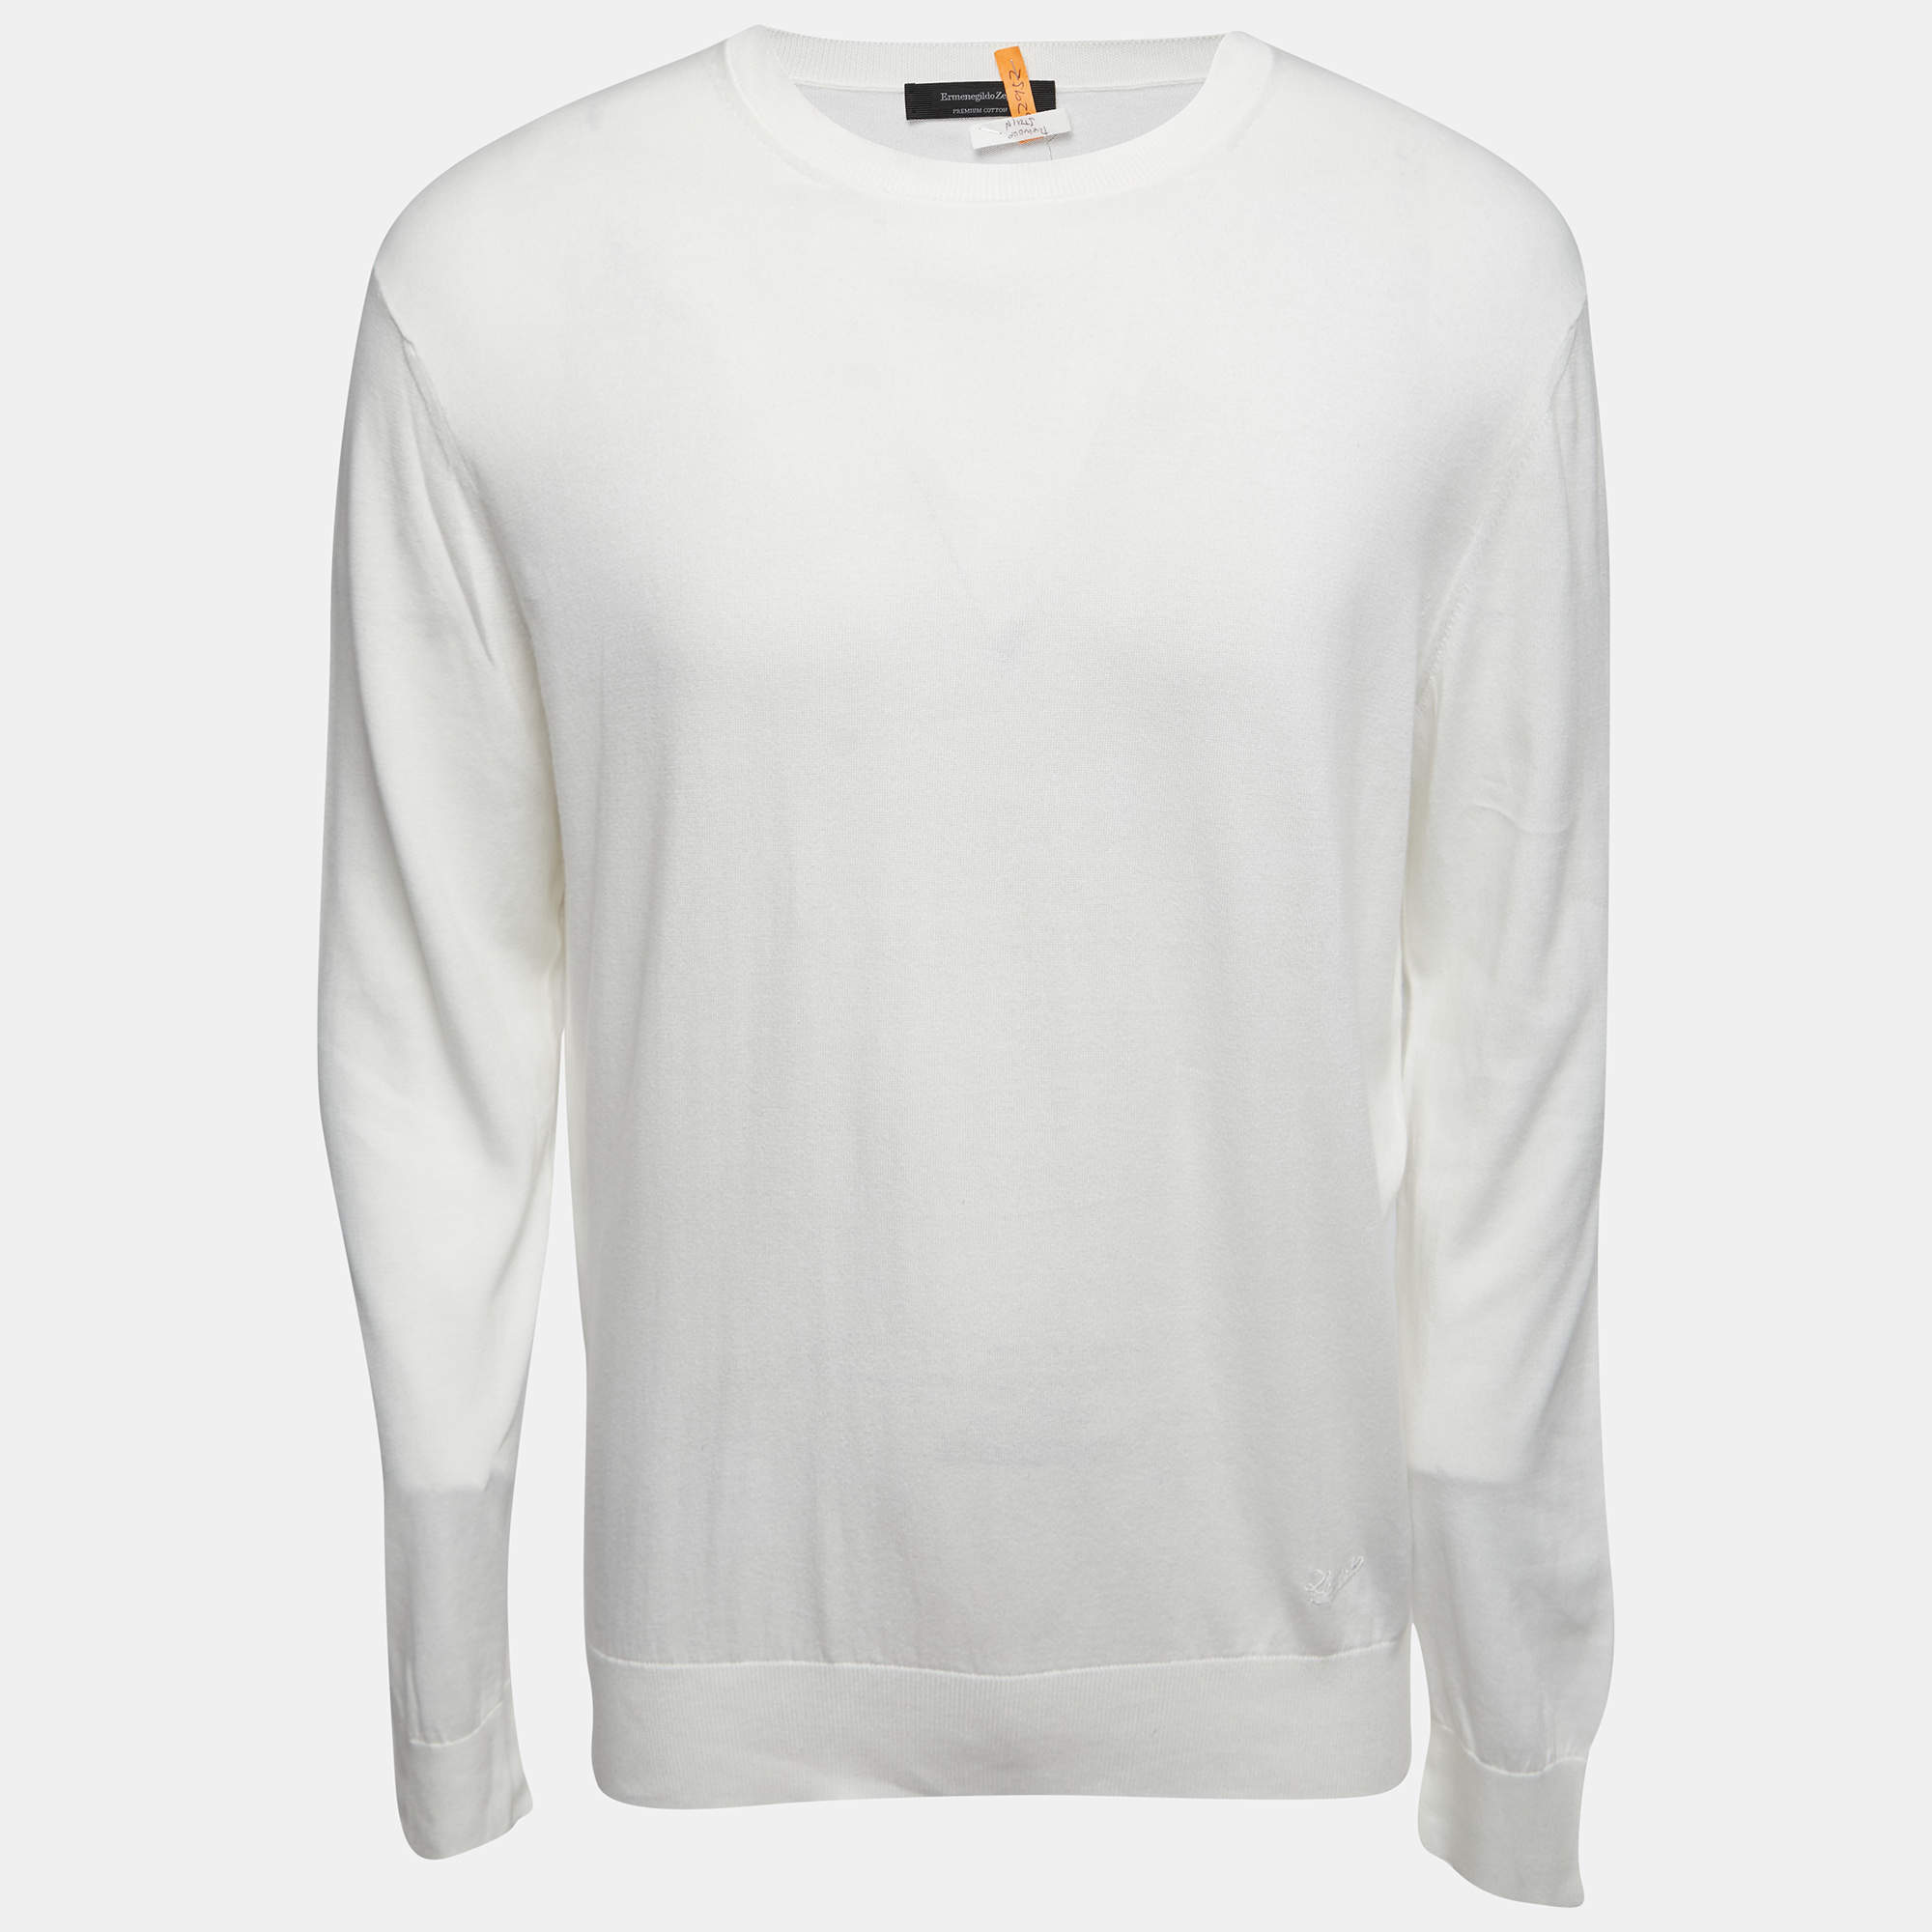 Ermenegildo Zegna Off White Cotton Crew Neck Sweater XL